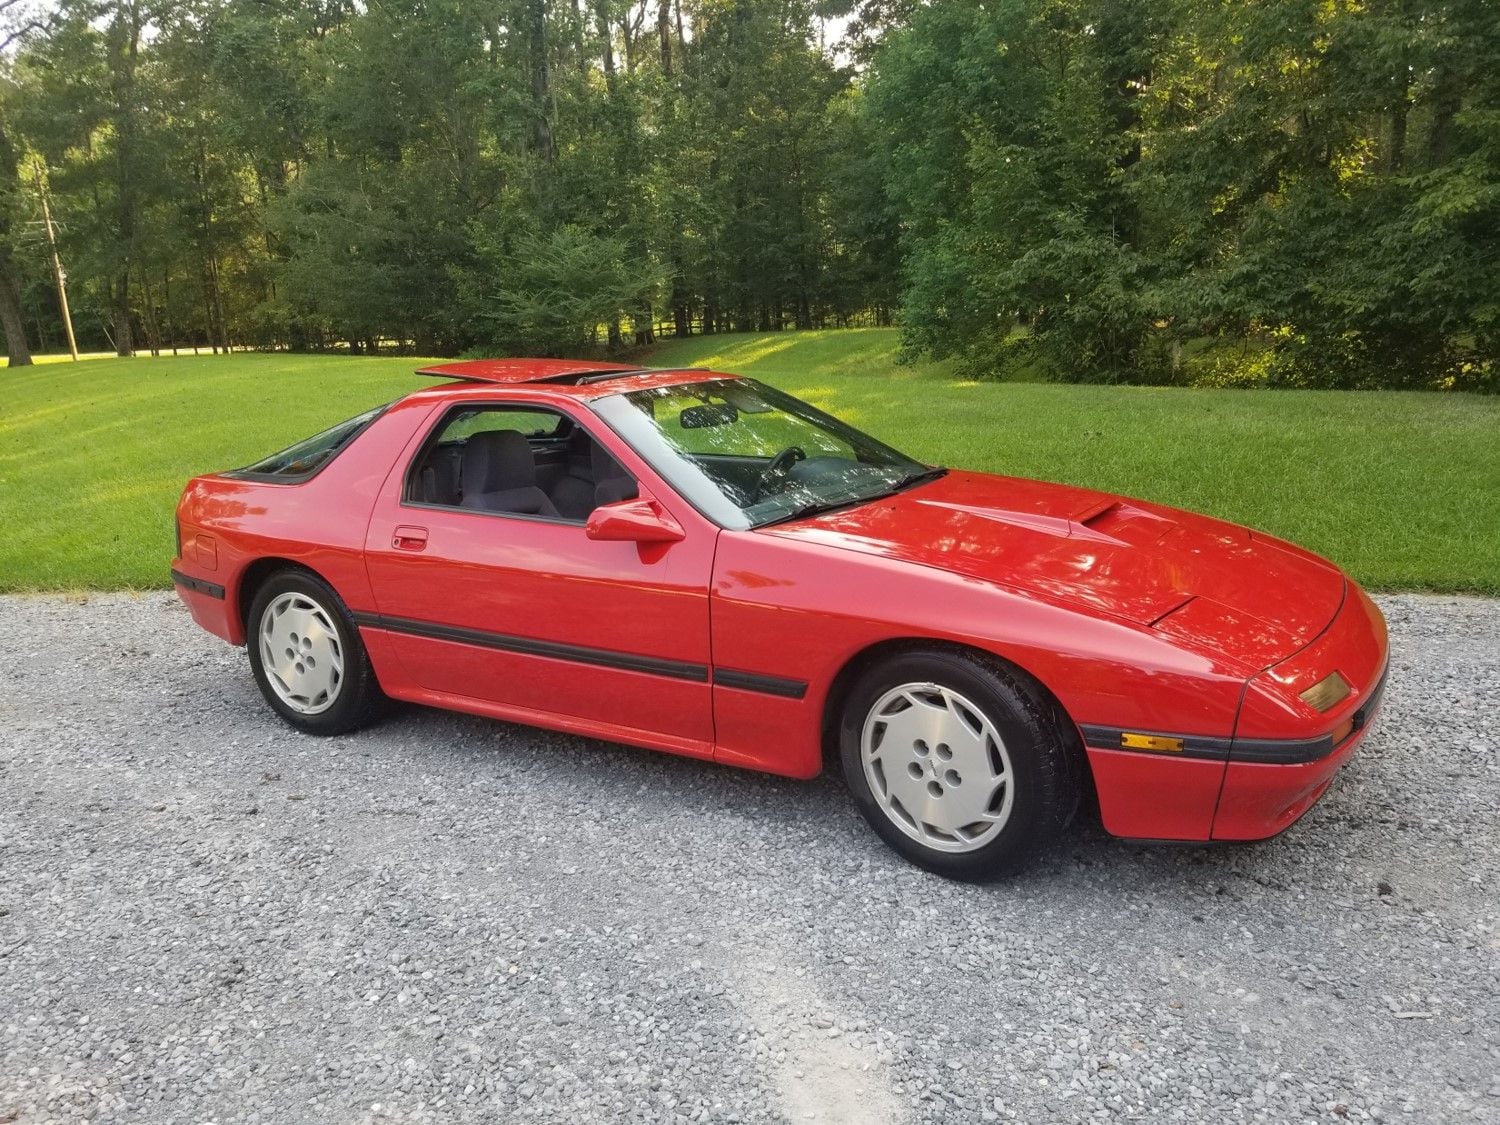 1987 Mazda RX-7 - For Sale 1987 RX 7 TII (Montgomery Alabama) - Used - VIN jmlfc3322h0544804 - 157,649 Miles - 2WD - Manual - Coupe - Red - Lowndesboro, AL 36752, United States